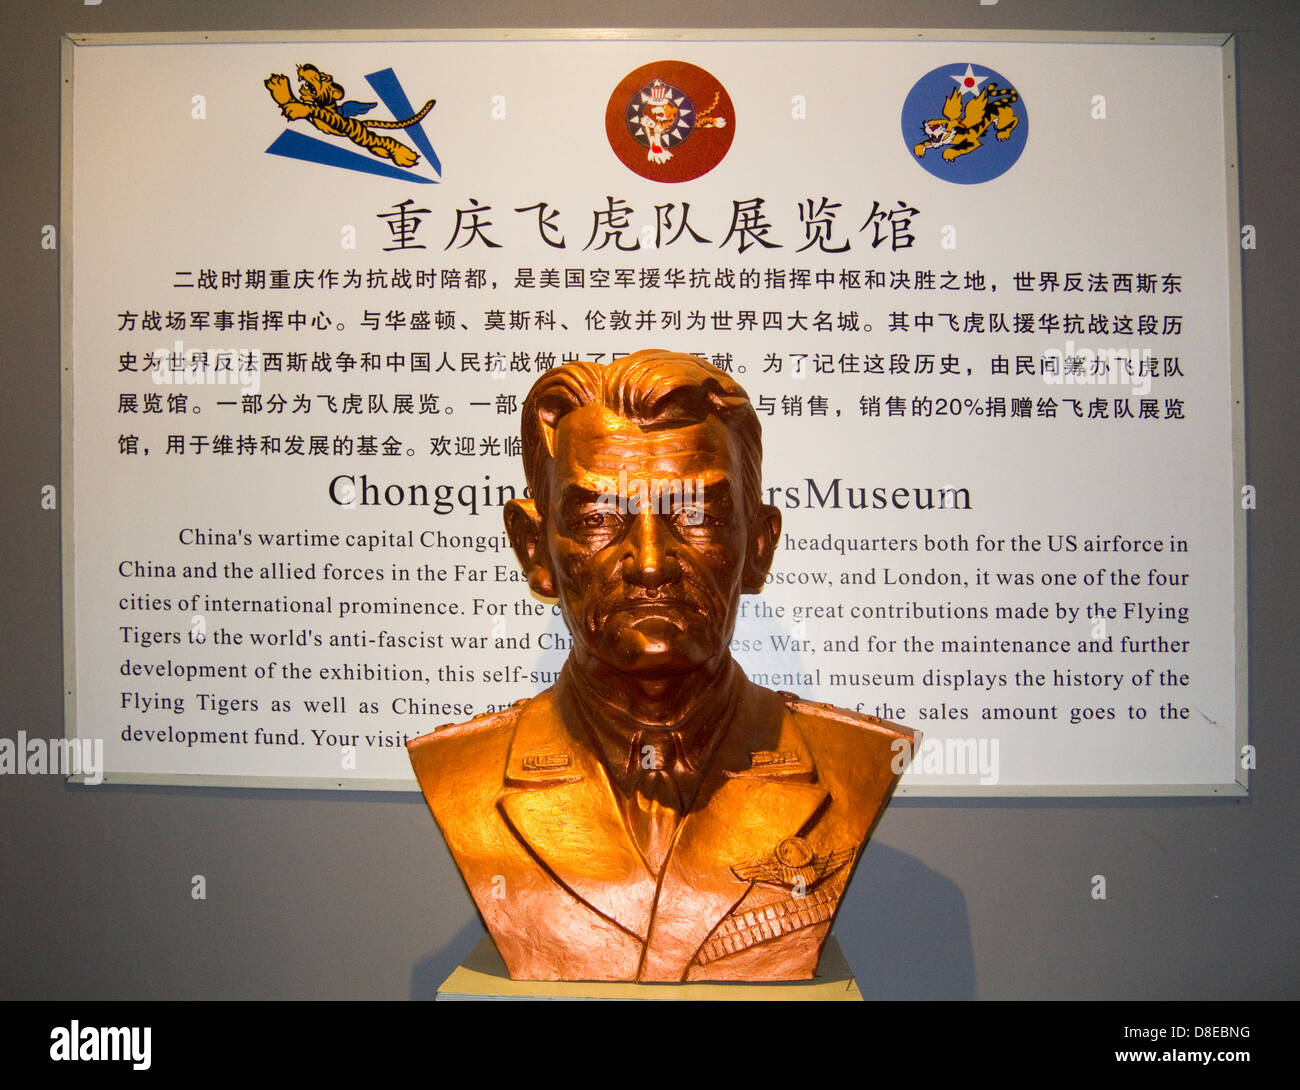 Bust of General Joseph Warren Stilwell, Flying Tigers Museum, Chongqing China Stock Photo